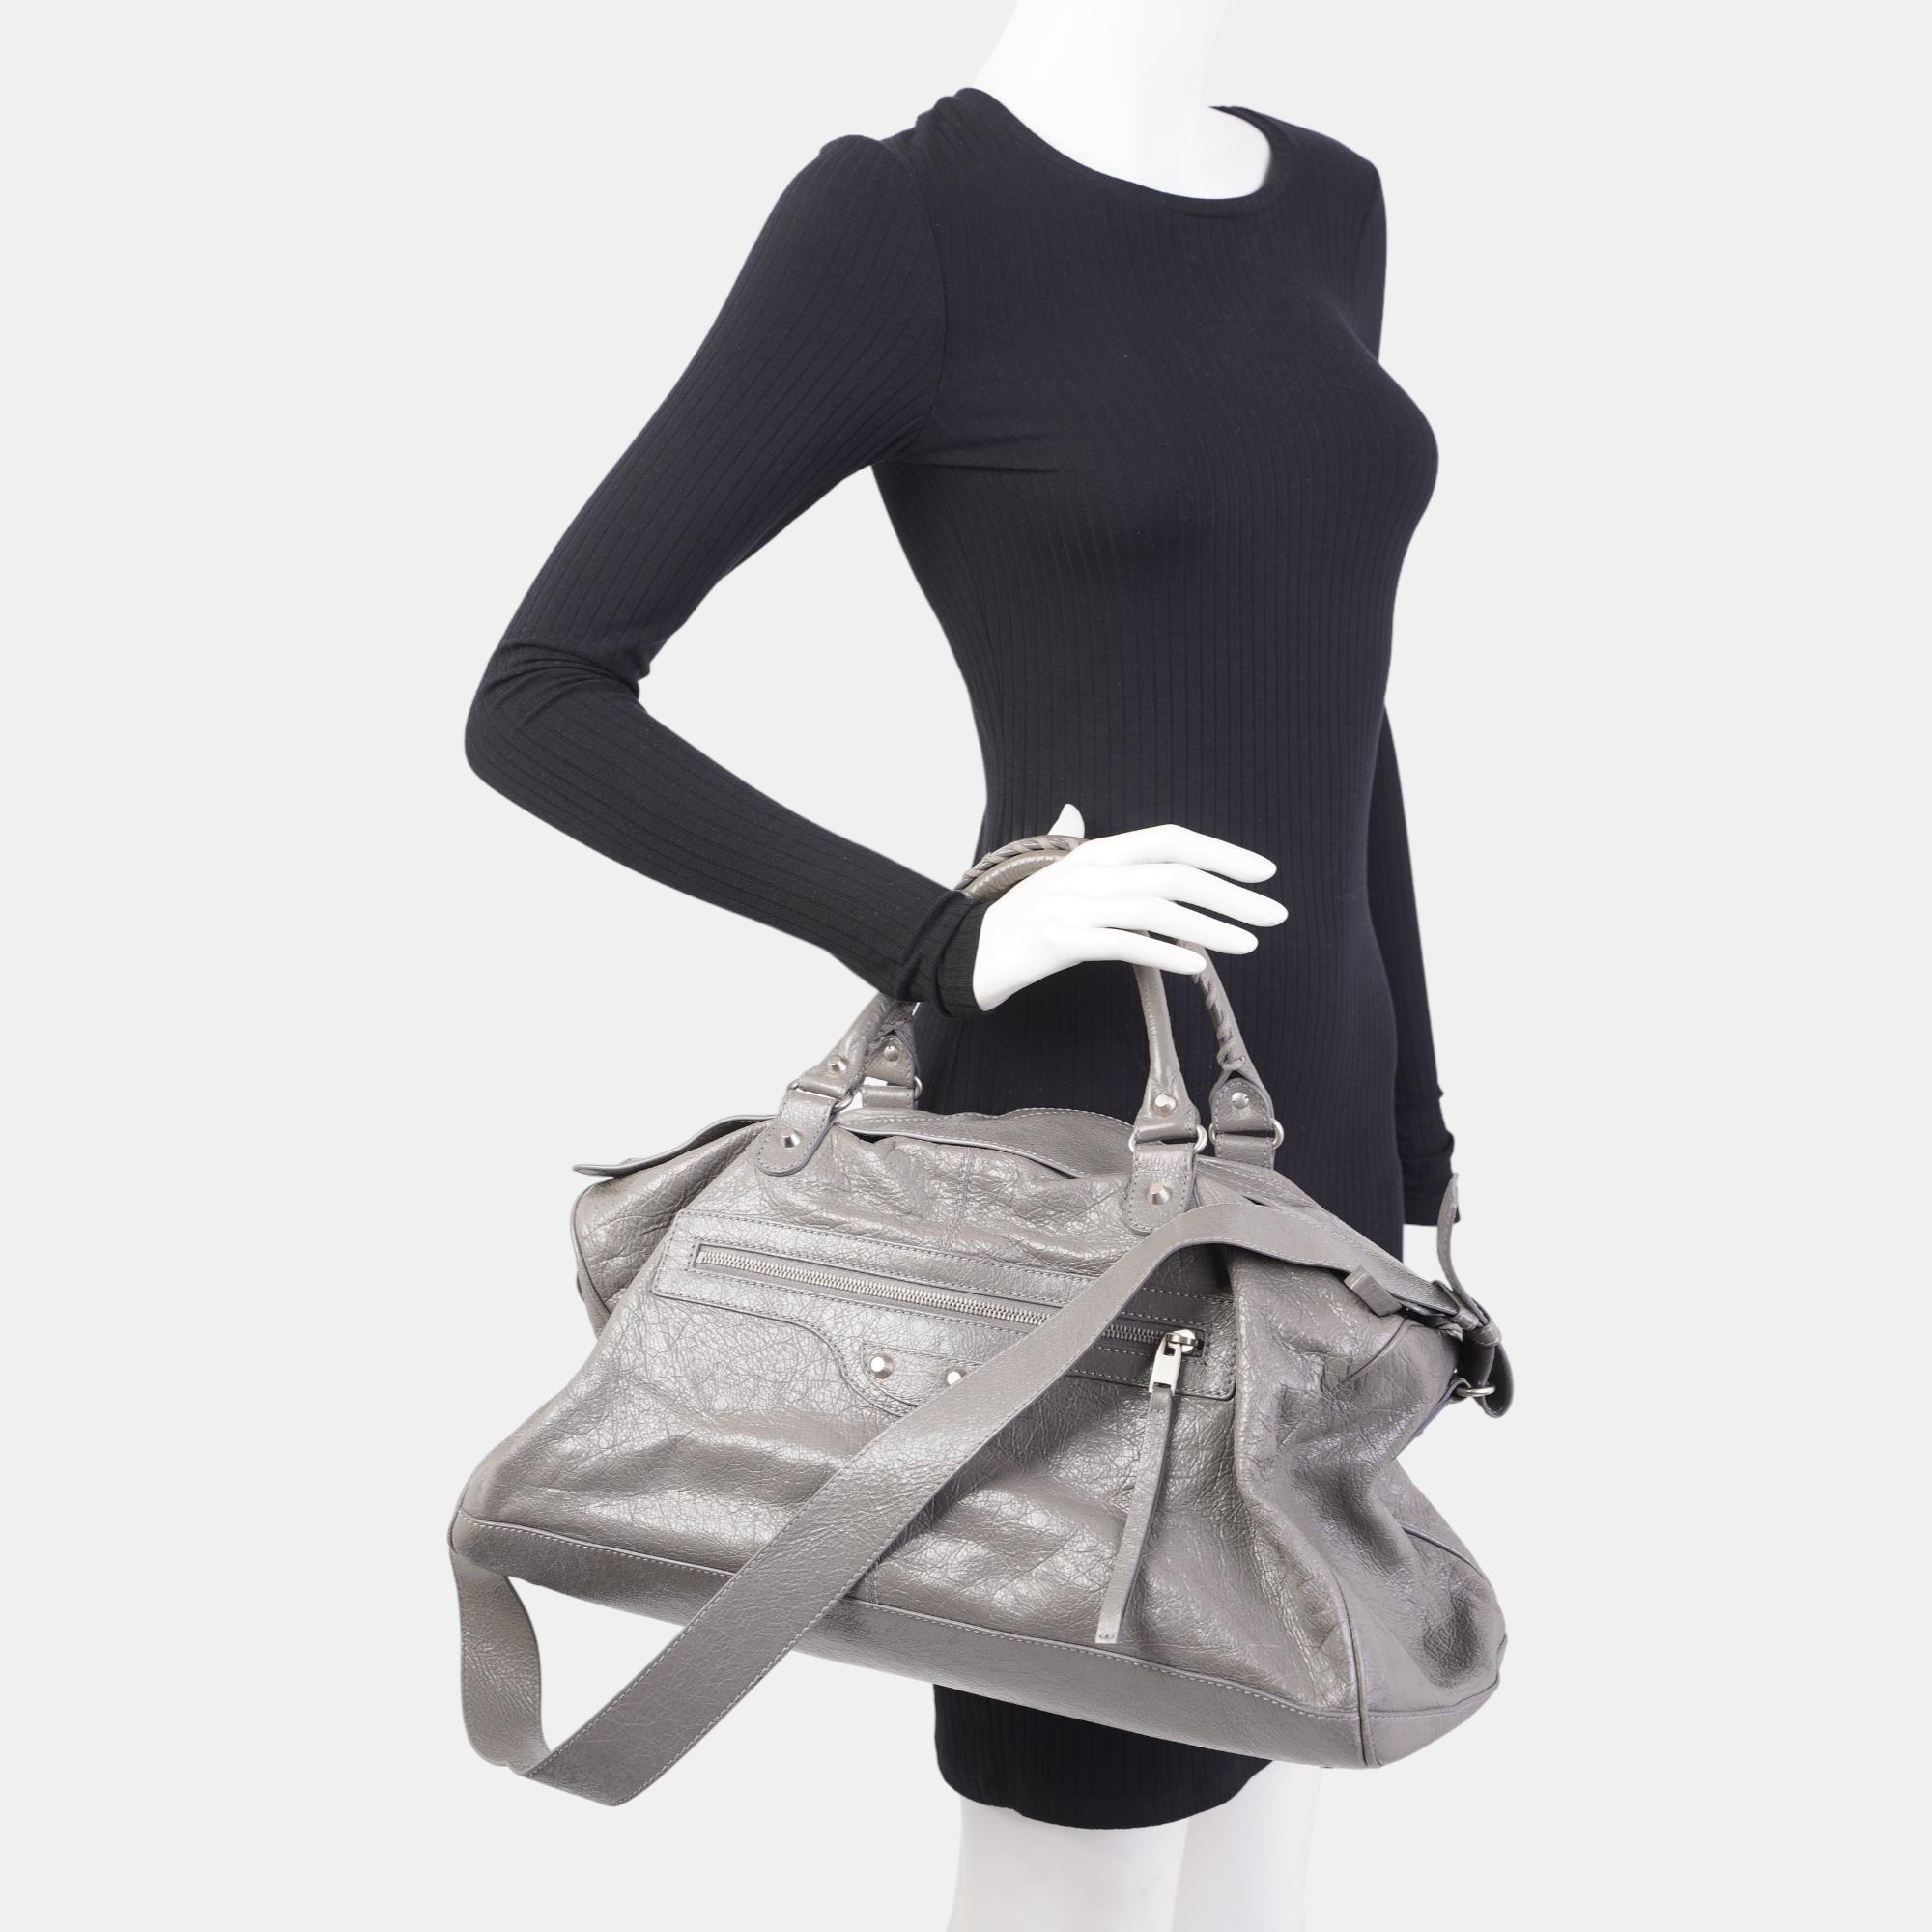 Balenciaga Squash Bag Grey Leather